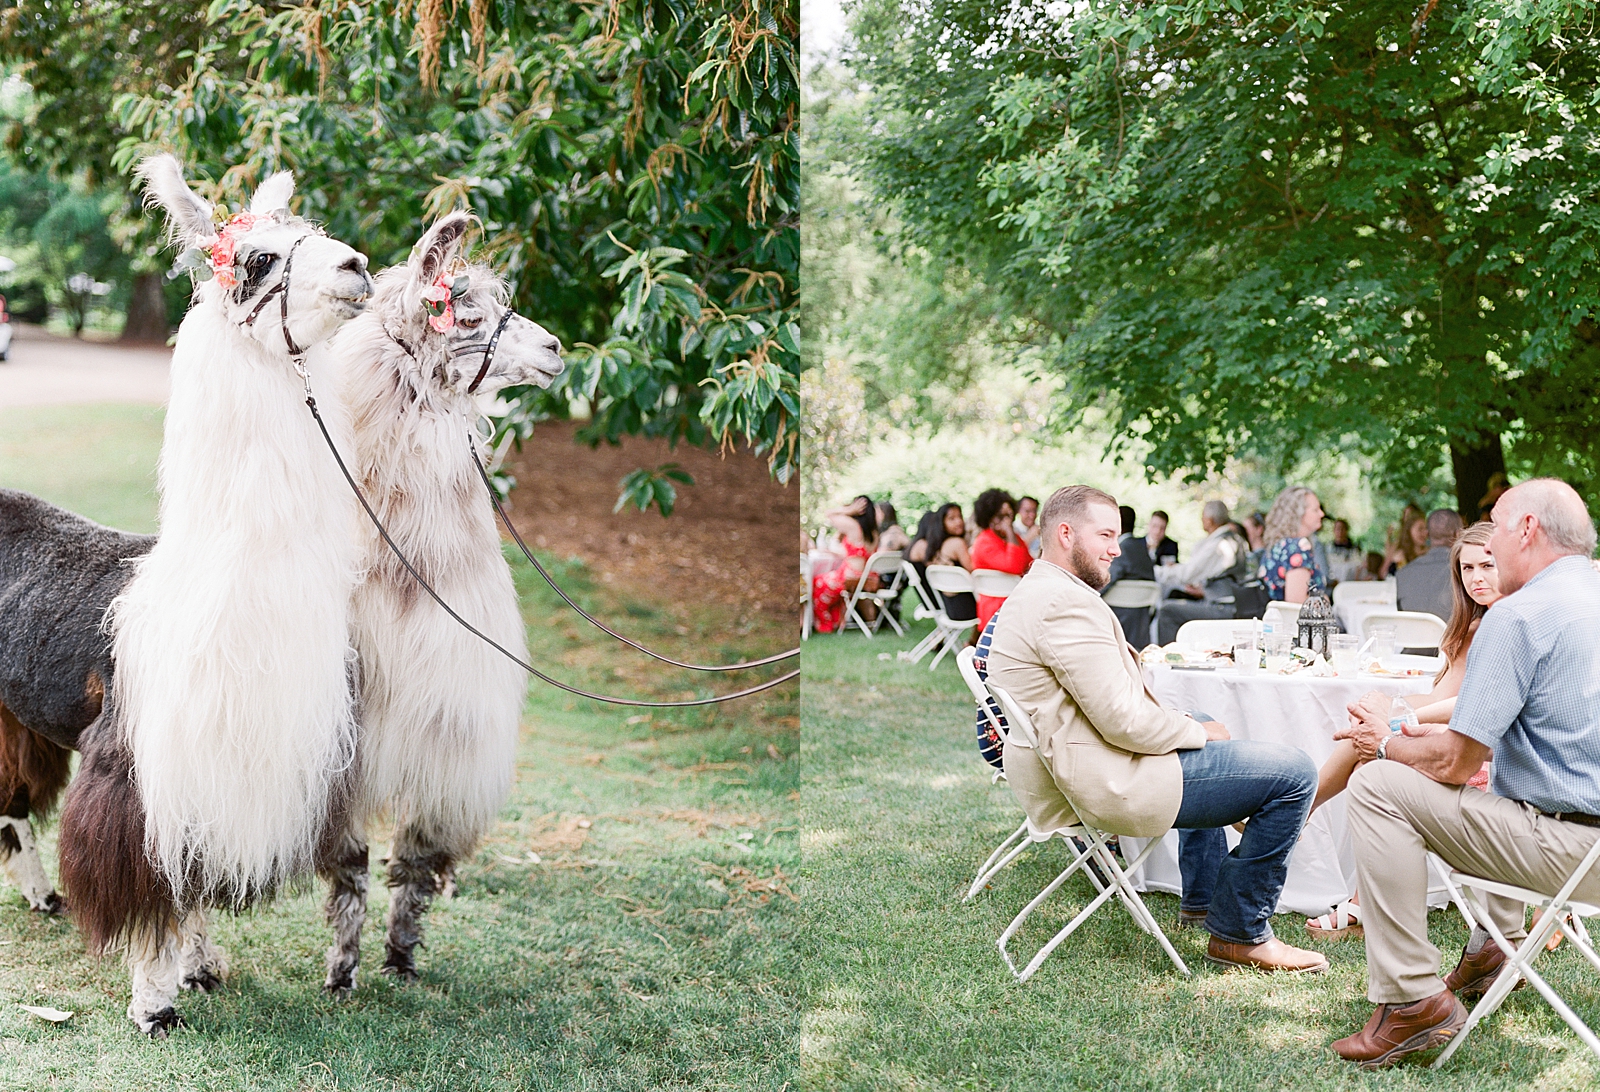 Black Fox Farms Garden Wedding Reception Llamas and Guests sitting at tables under trees Photos